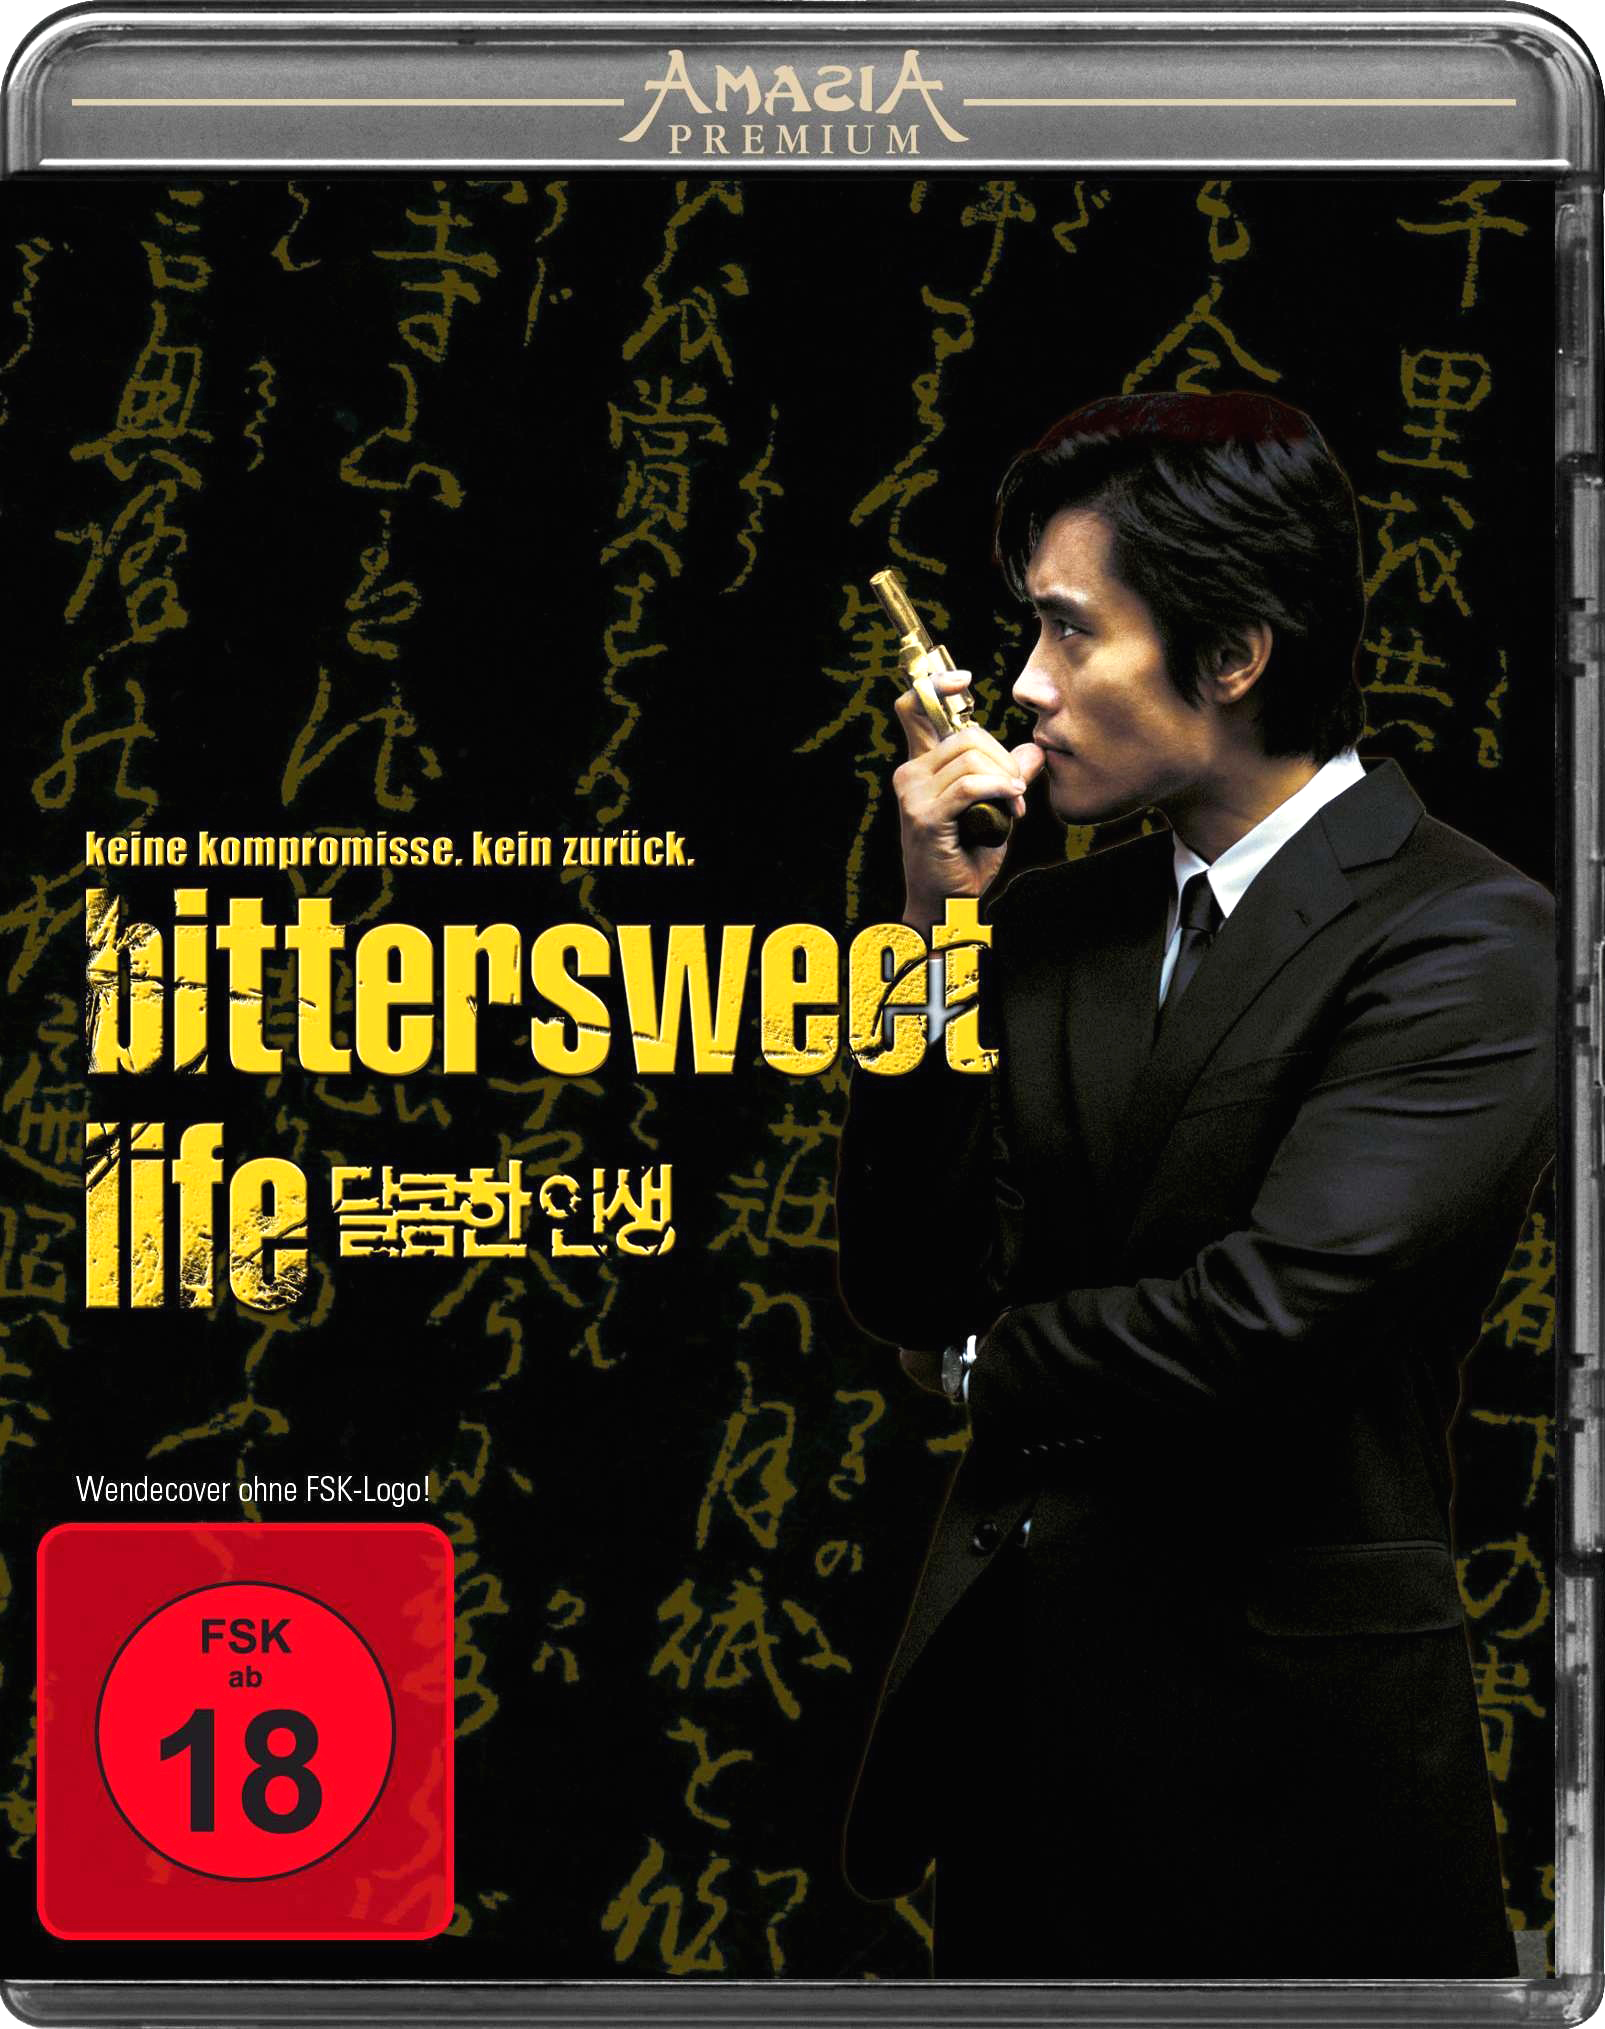 [甜蜜人生].A.Bittersweet.Life.2005.BluRay.1080p.AVC.DTS-HD.MA.5.1-Solitude    44.46G-1.jpg